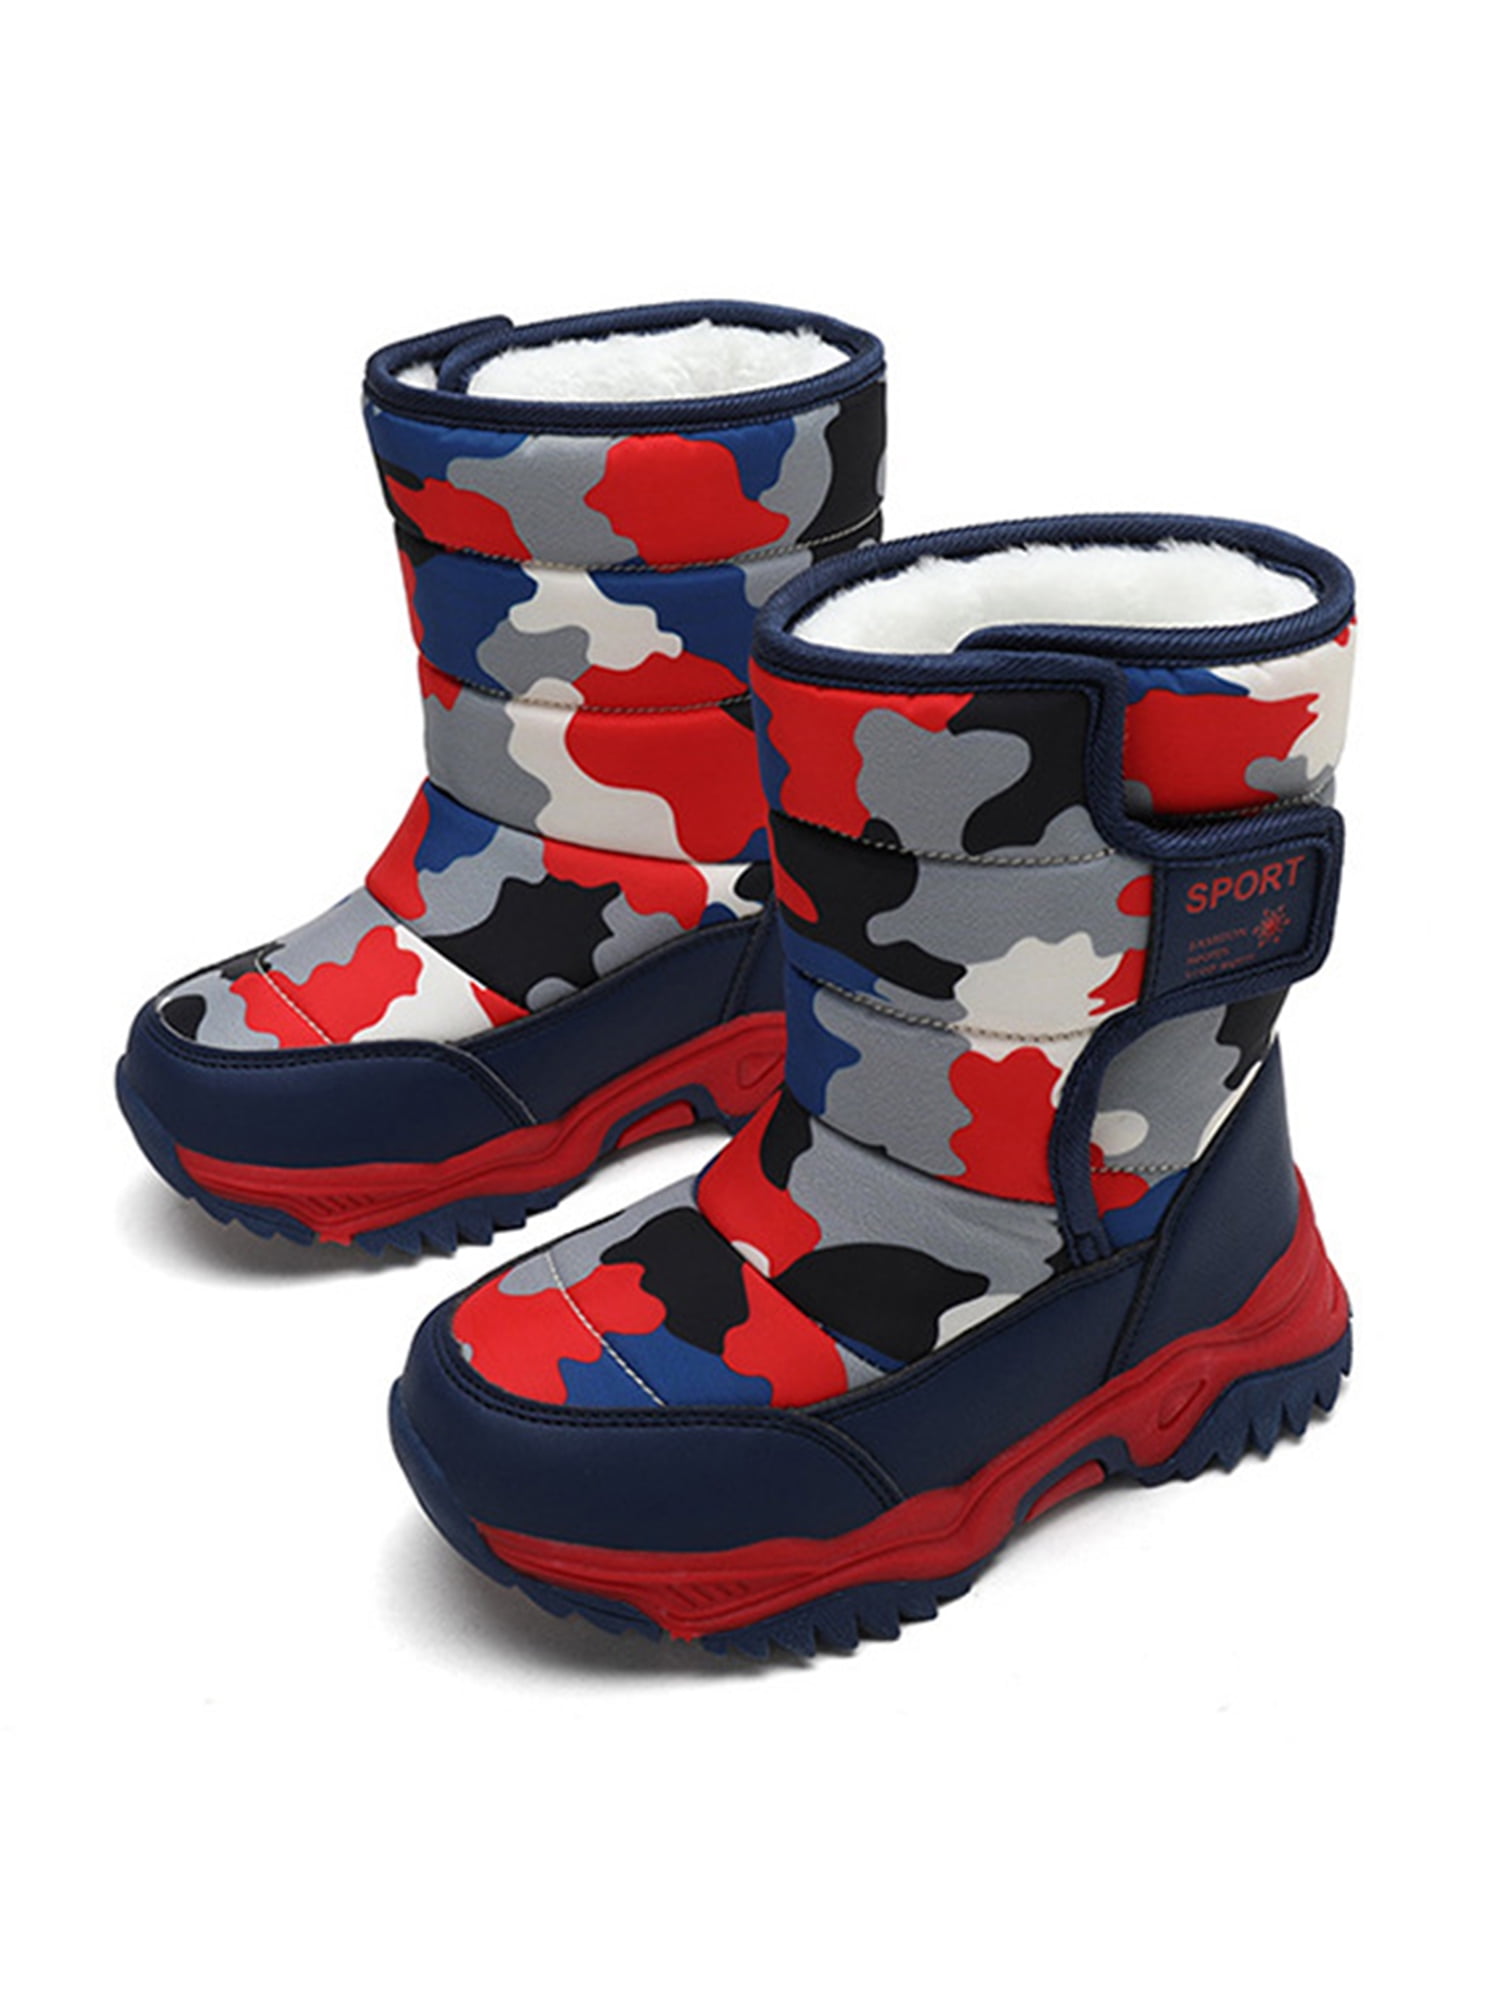 Girls Boys Toddler/Little Kid/Big Kid Winter Snow Boots Warm Waterproof Anti-Slip Anti-Collision Hight-Cut for Outdoor Skiing